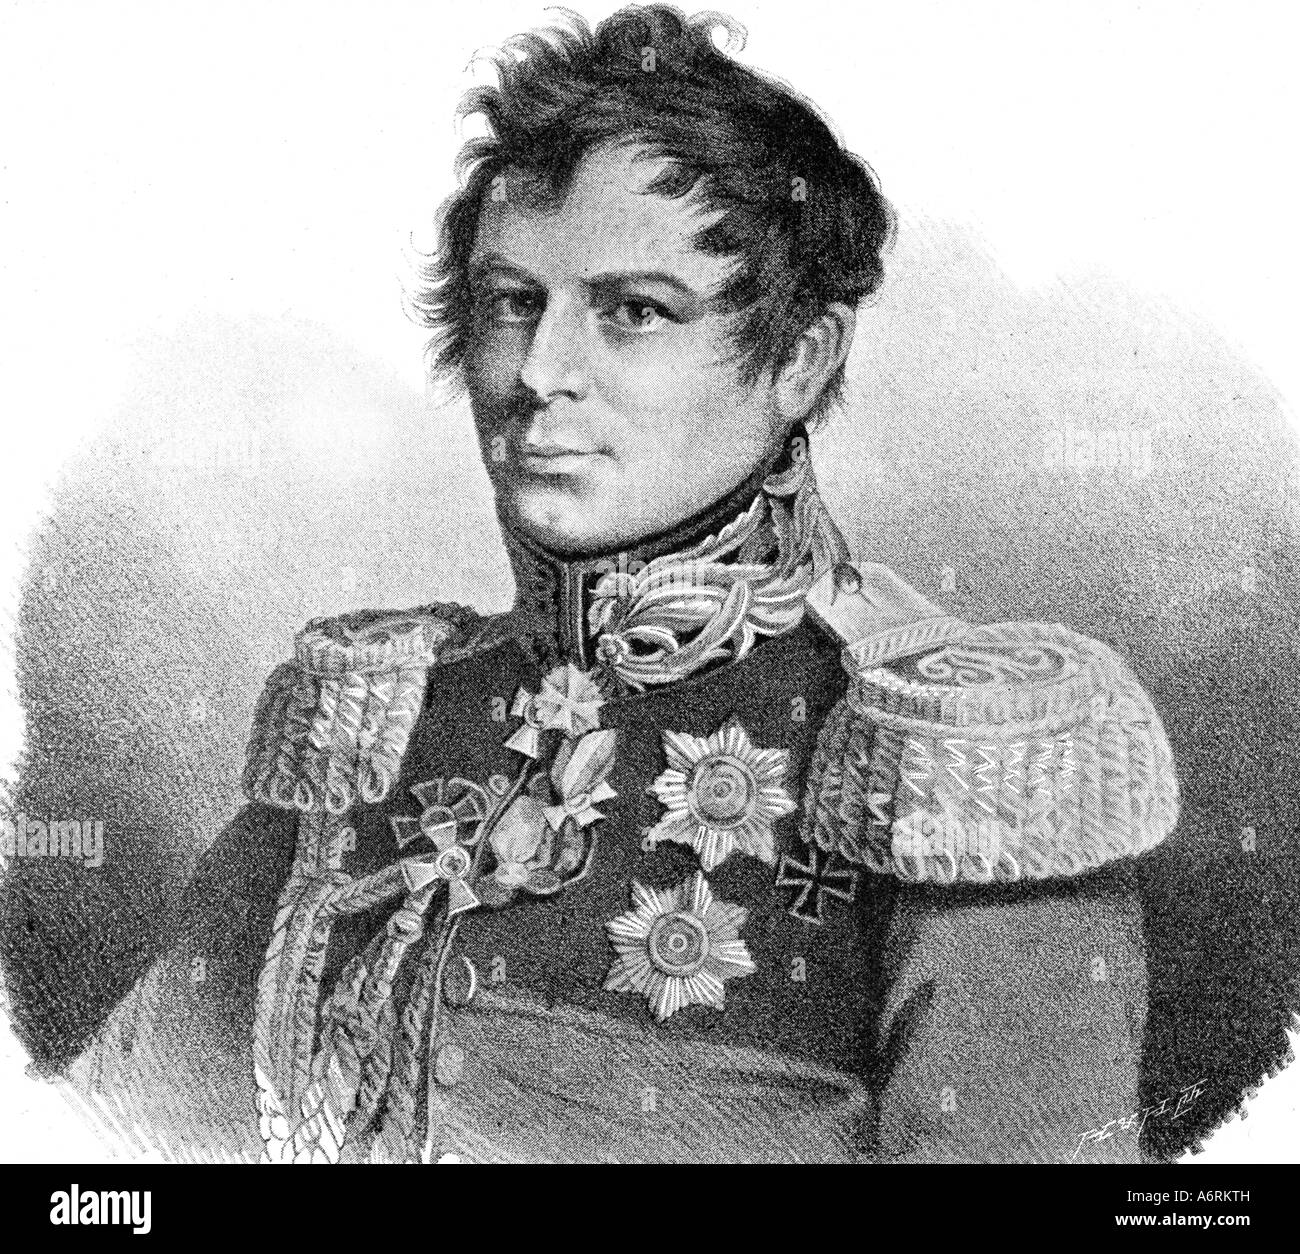 Diebitsch-Zabalkansky, Ivan Ivanovich, 13.5.1785 - 10.6.1831, Russian General, portrait, engraving, early 19th century, German, Stock Photo